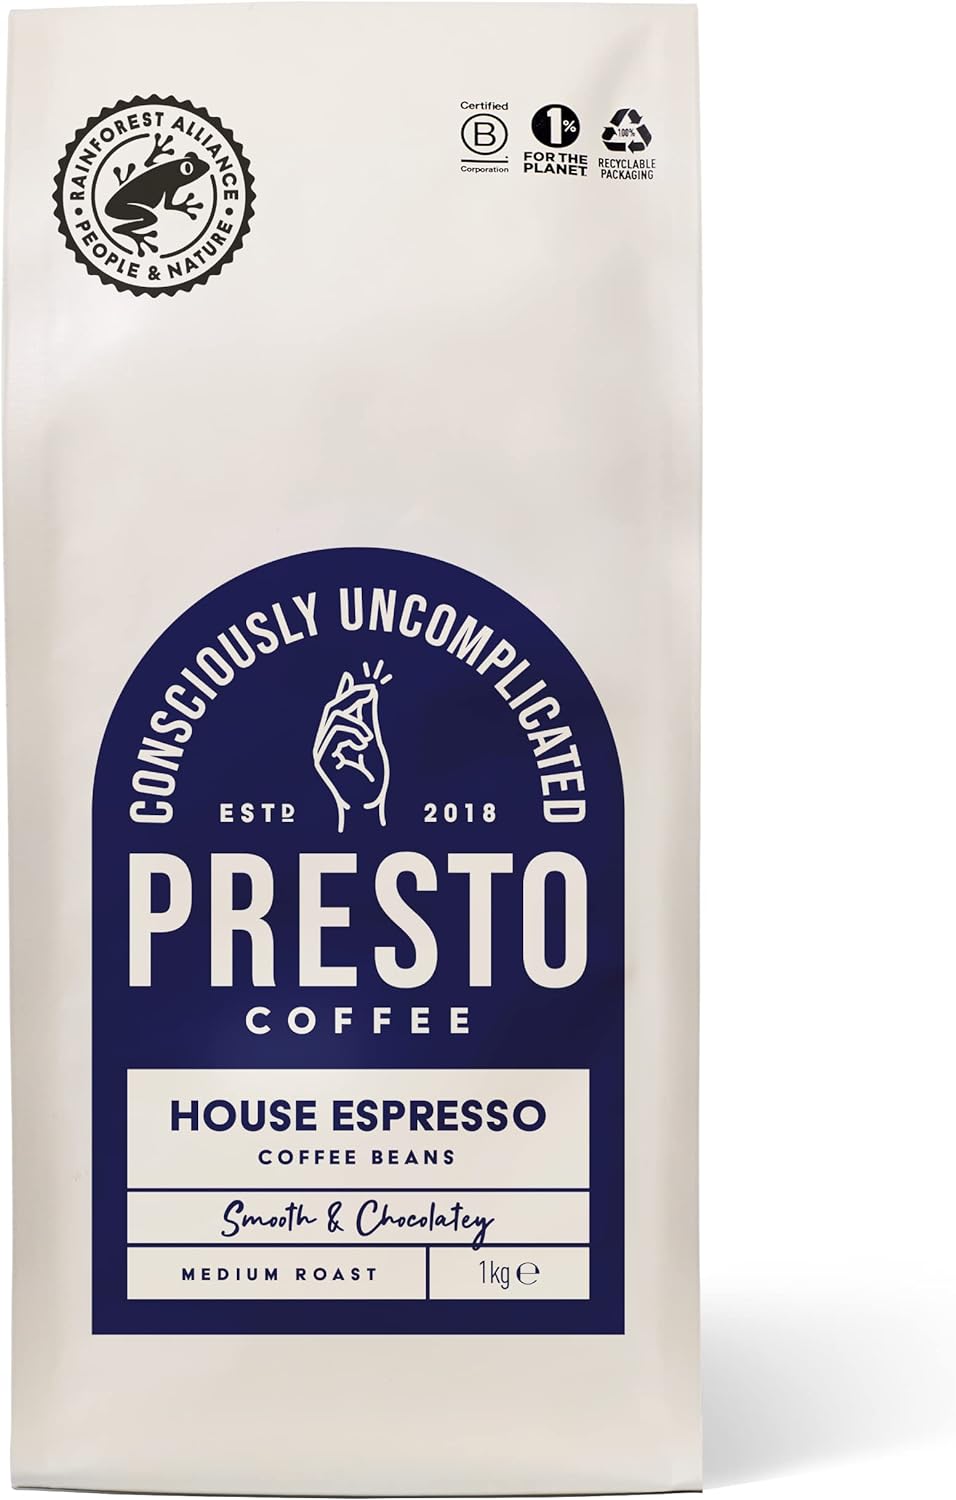 Presto Coffee House Espresso Speciality Coffee Beans 1kg Medium Roast (4/5) Tasting Notes of Chocolate and Almond Rain Forest Aliance Certifed 100% Arabica